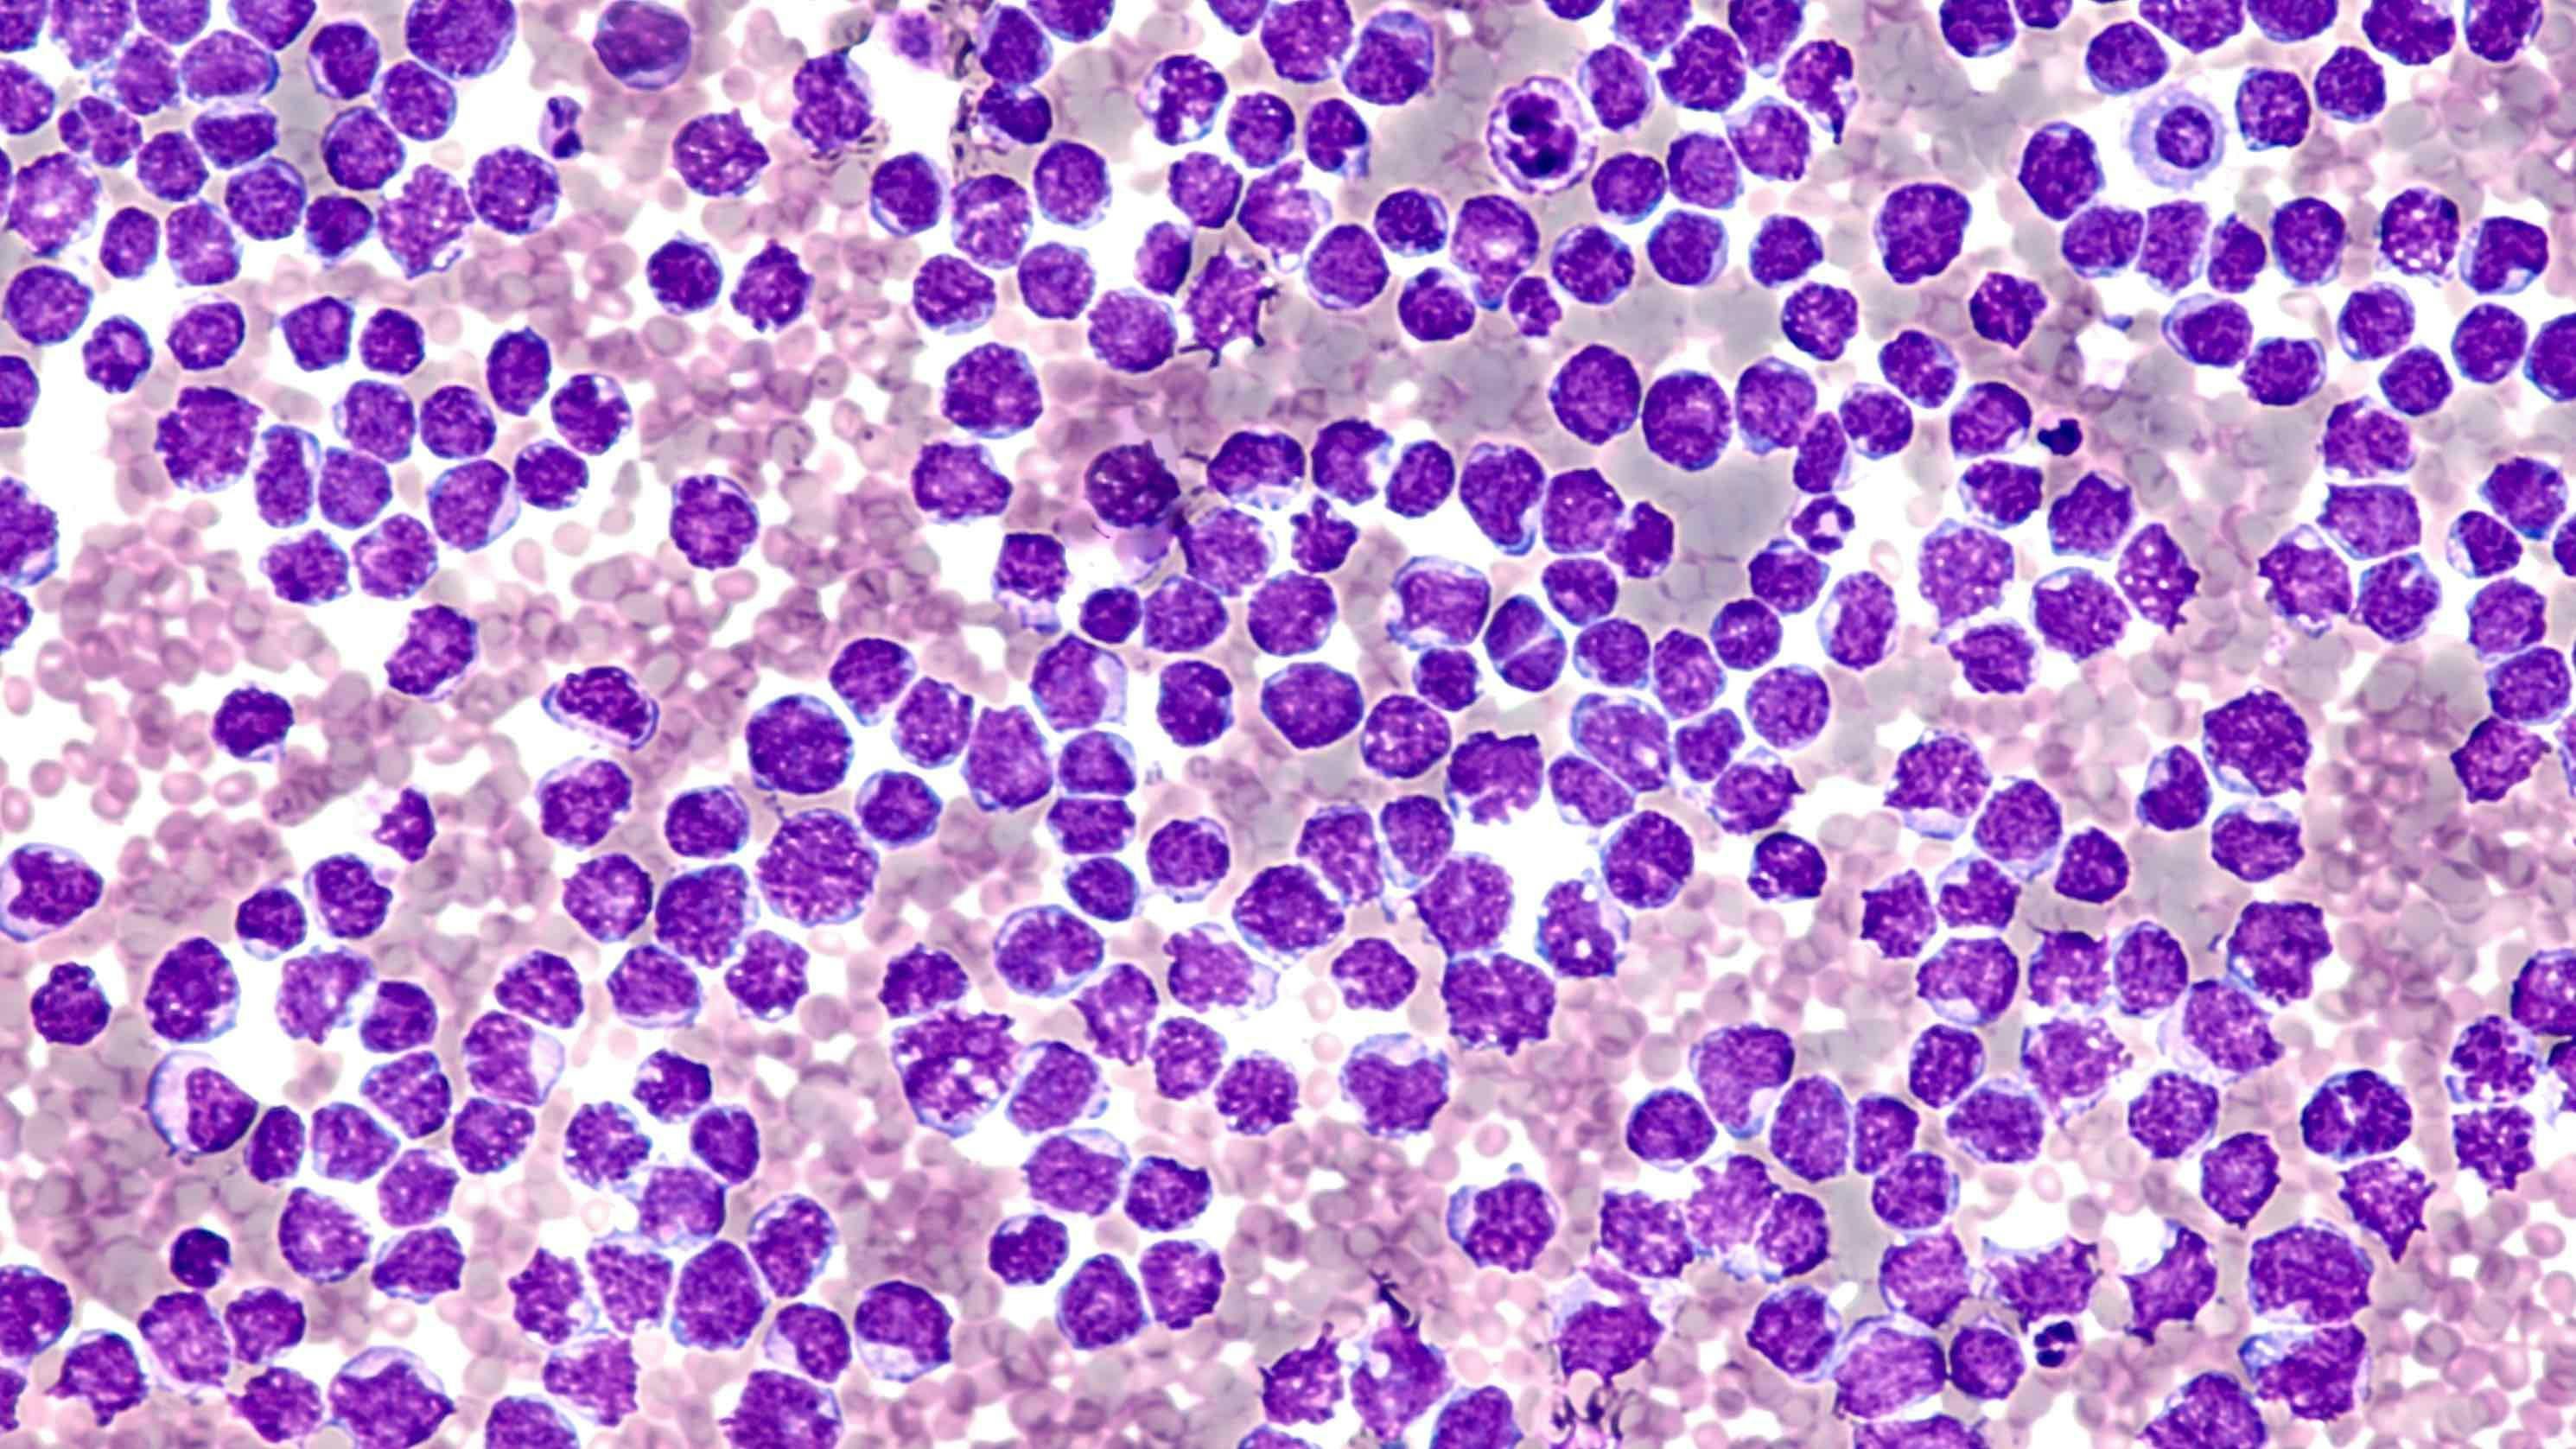 Mantle cell lymphoma Image credit: David A Litman - stock.adobe.com